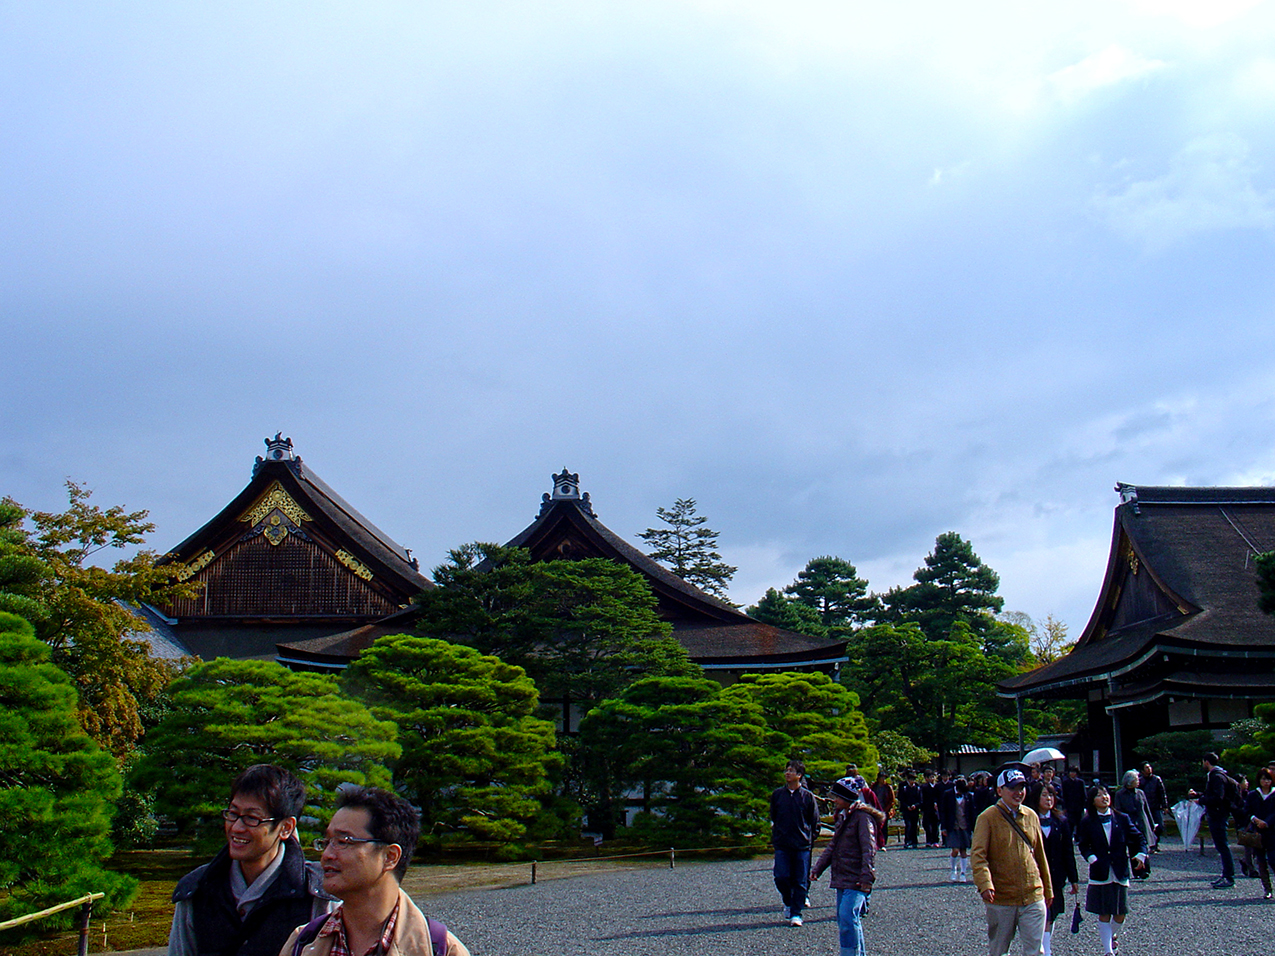 A Zen Garden inside the Imperial Palace